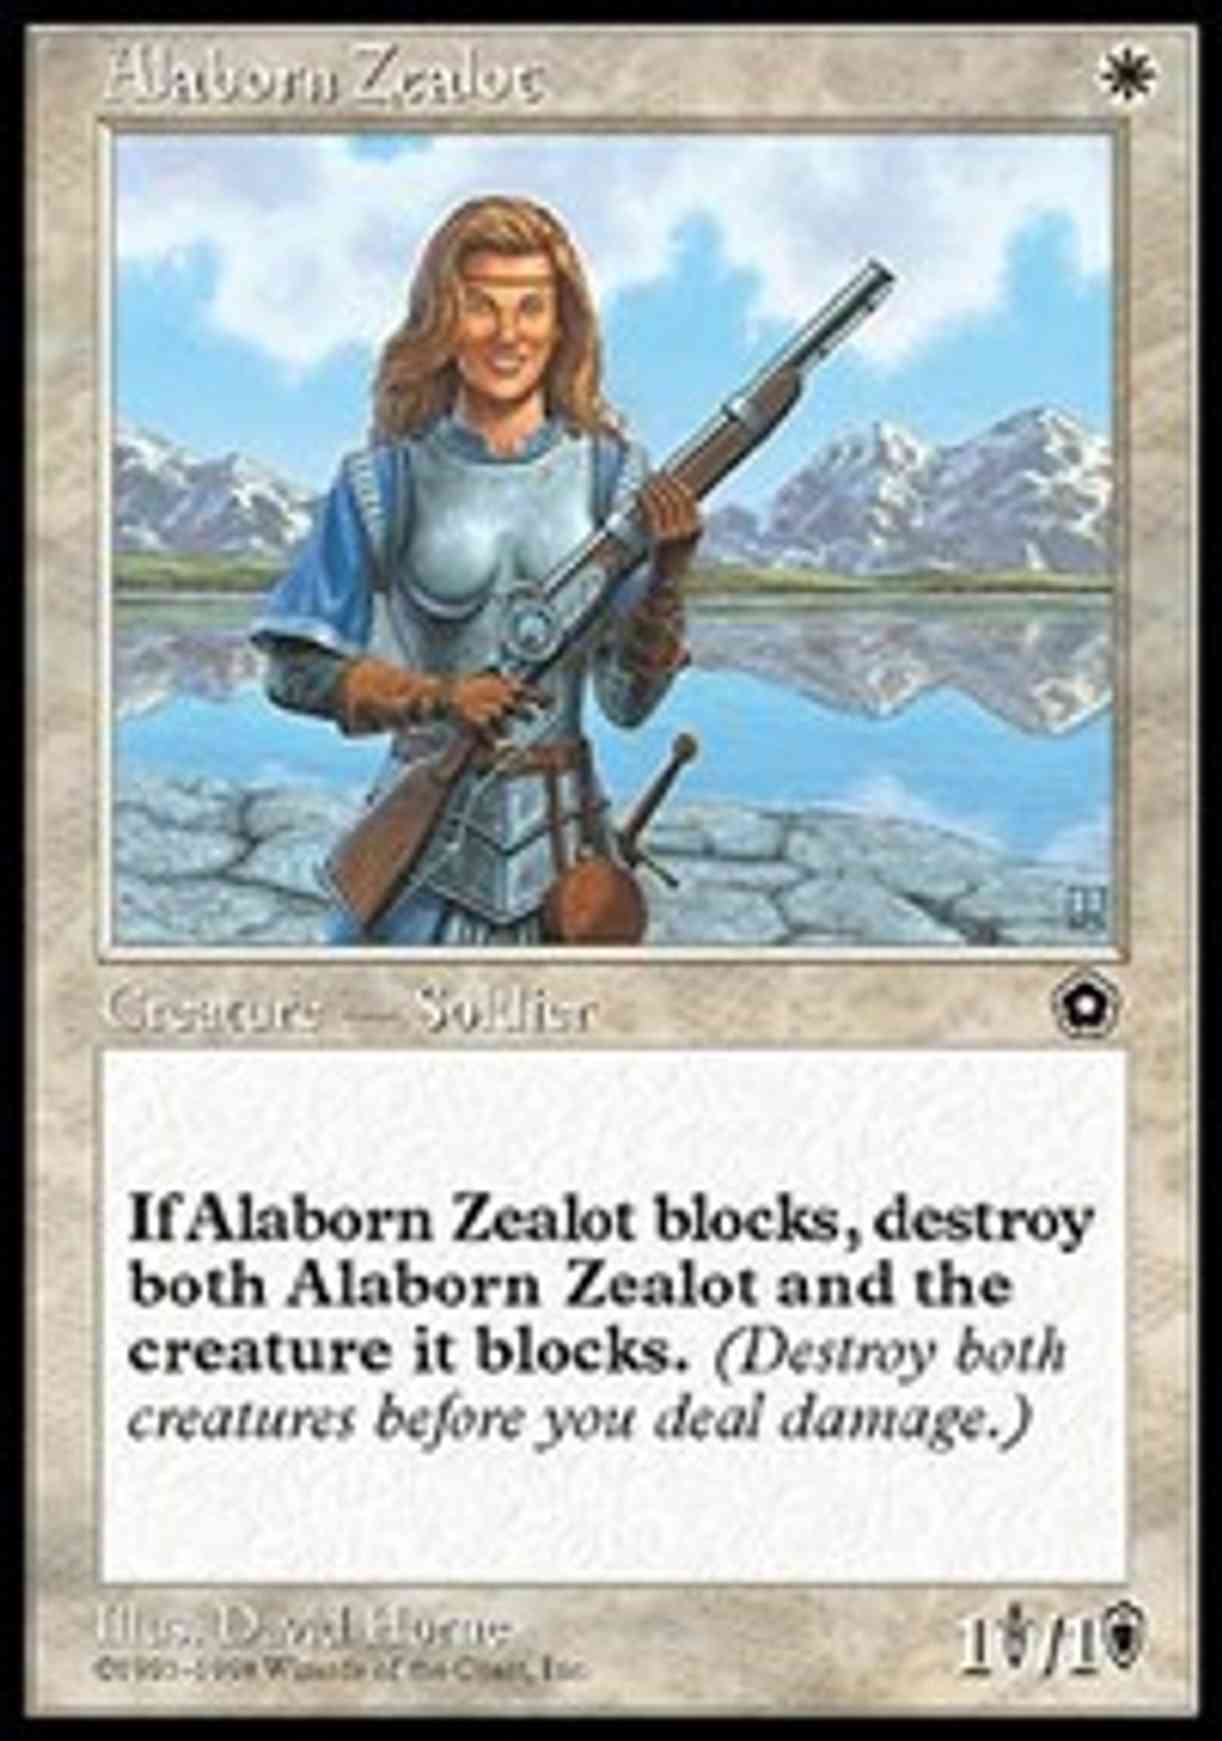 Alaborn Zealot magic card front